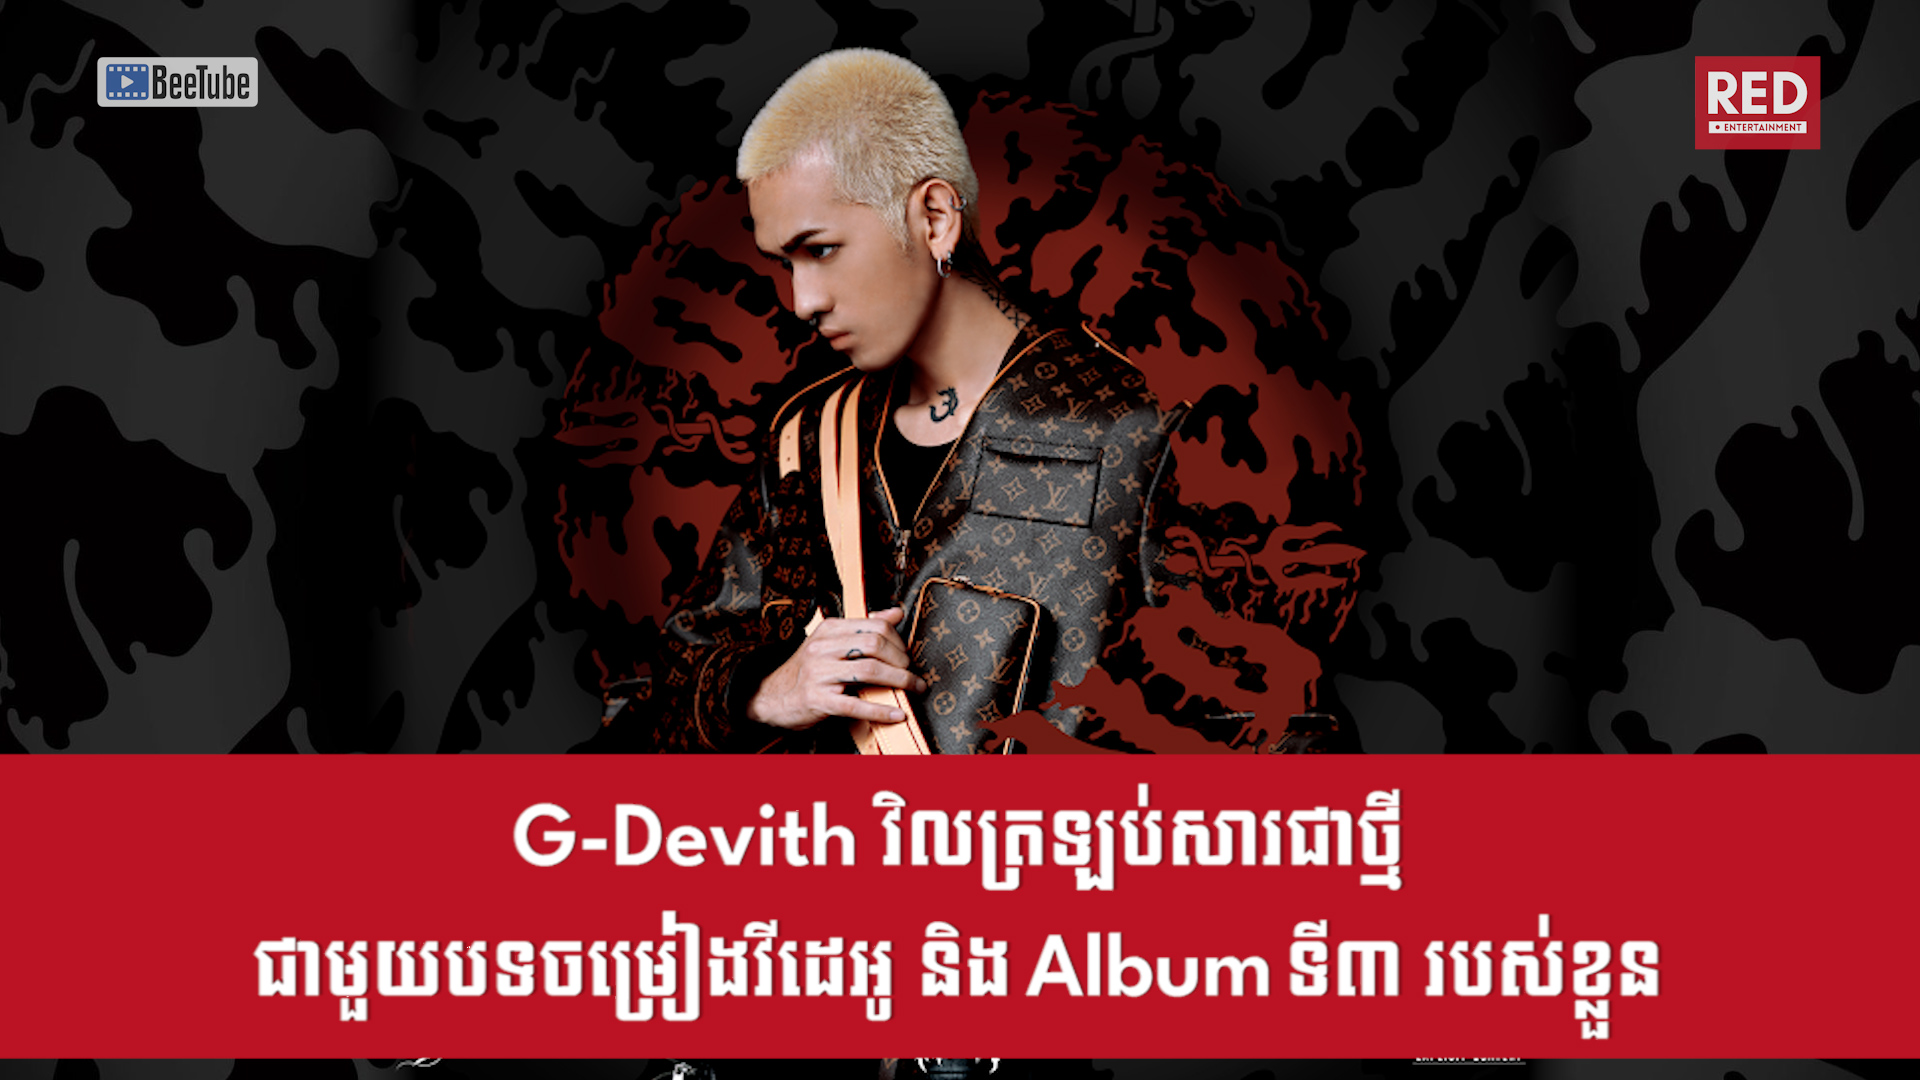 G-Devith វិលត្រឡប់សារជាថ្មីជាមួយបទចម្រៀងវីដេអូនិង Album ទី៣របស់ខ្លួន